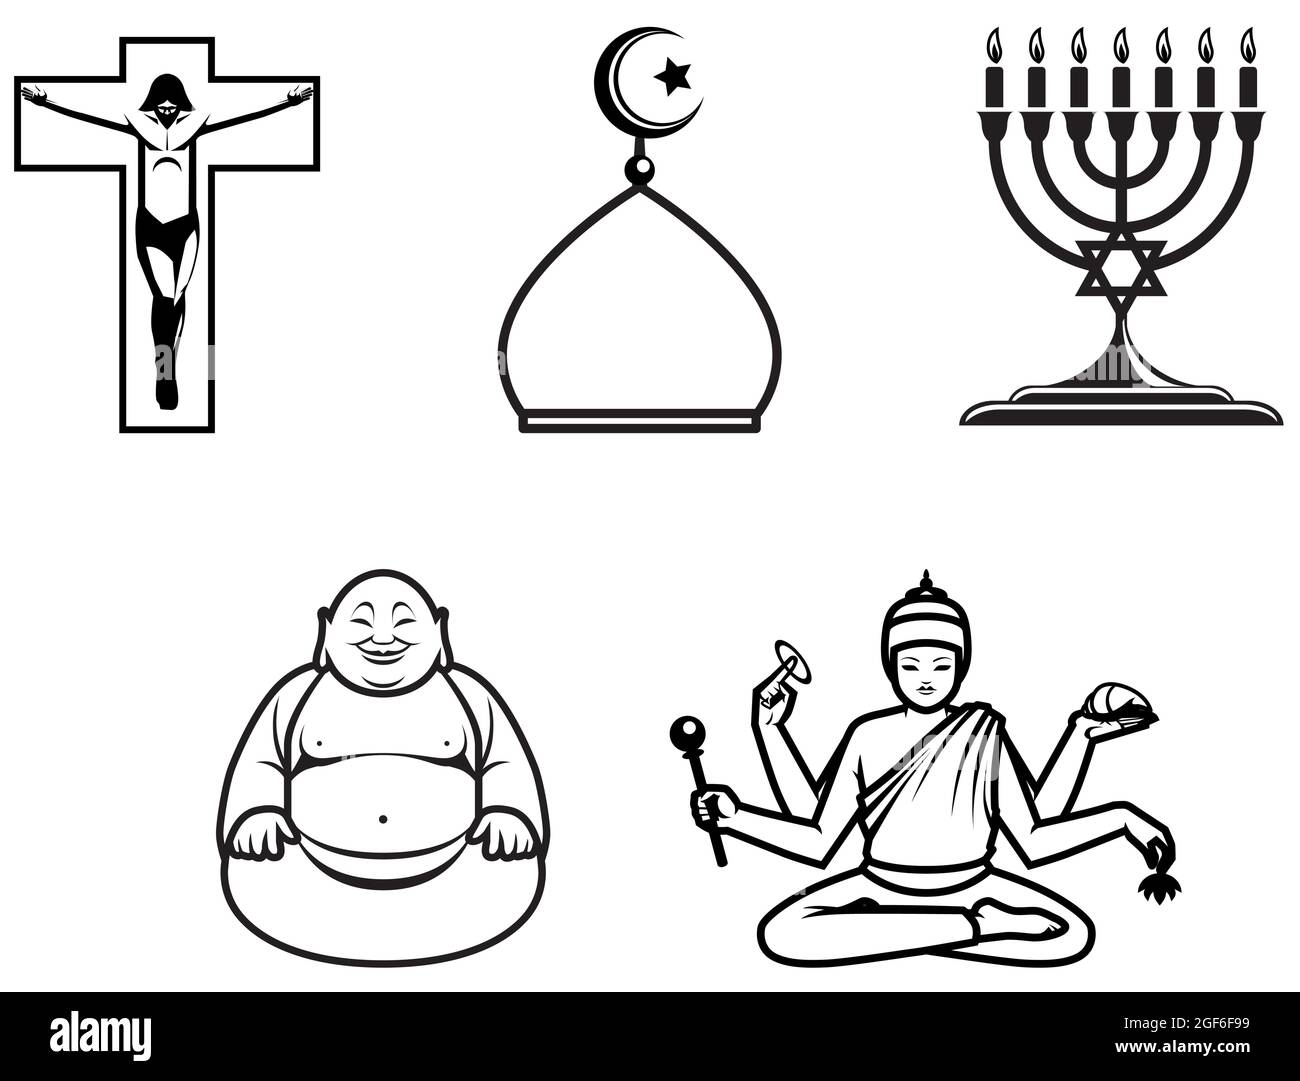 Vector illustration Religious symbols of 5 main world religions. Stock Vector